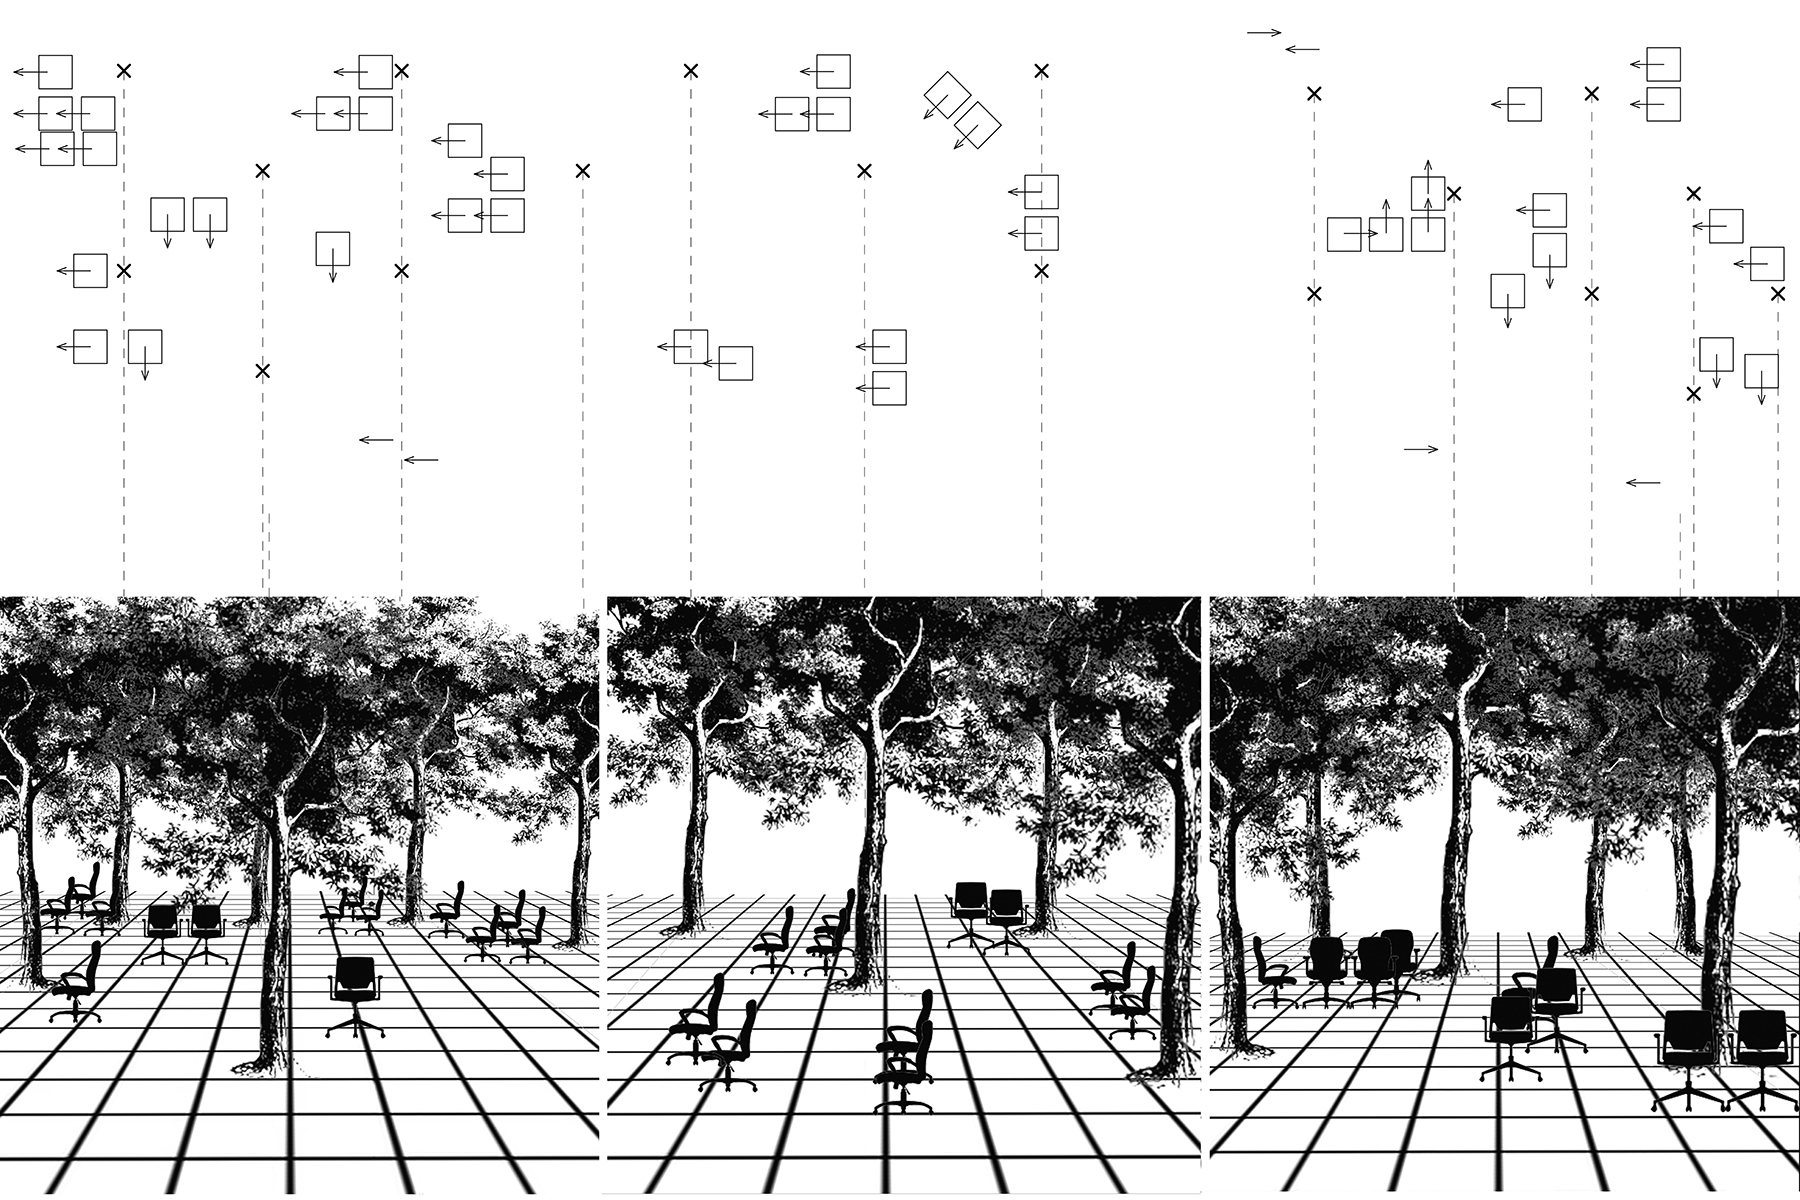 Rethinking public space in “Future Publics” (via School of Architecture)